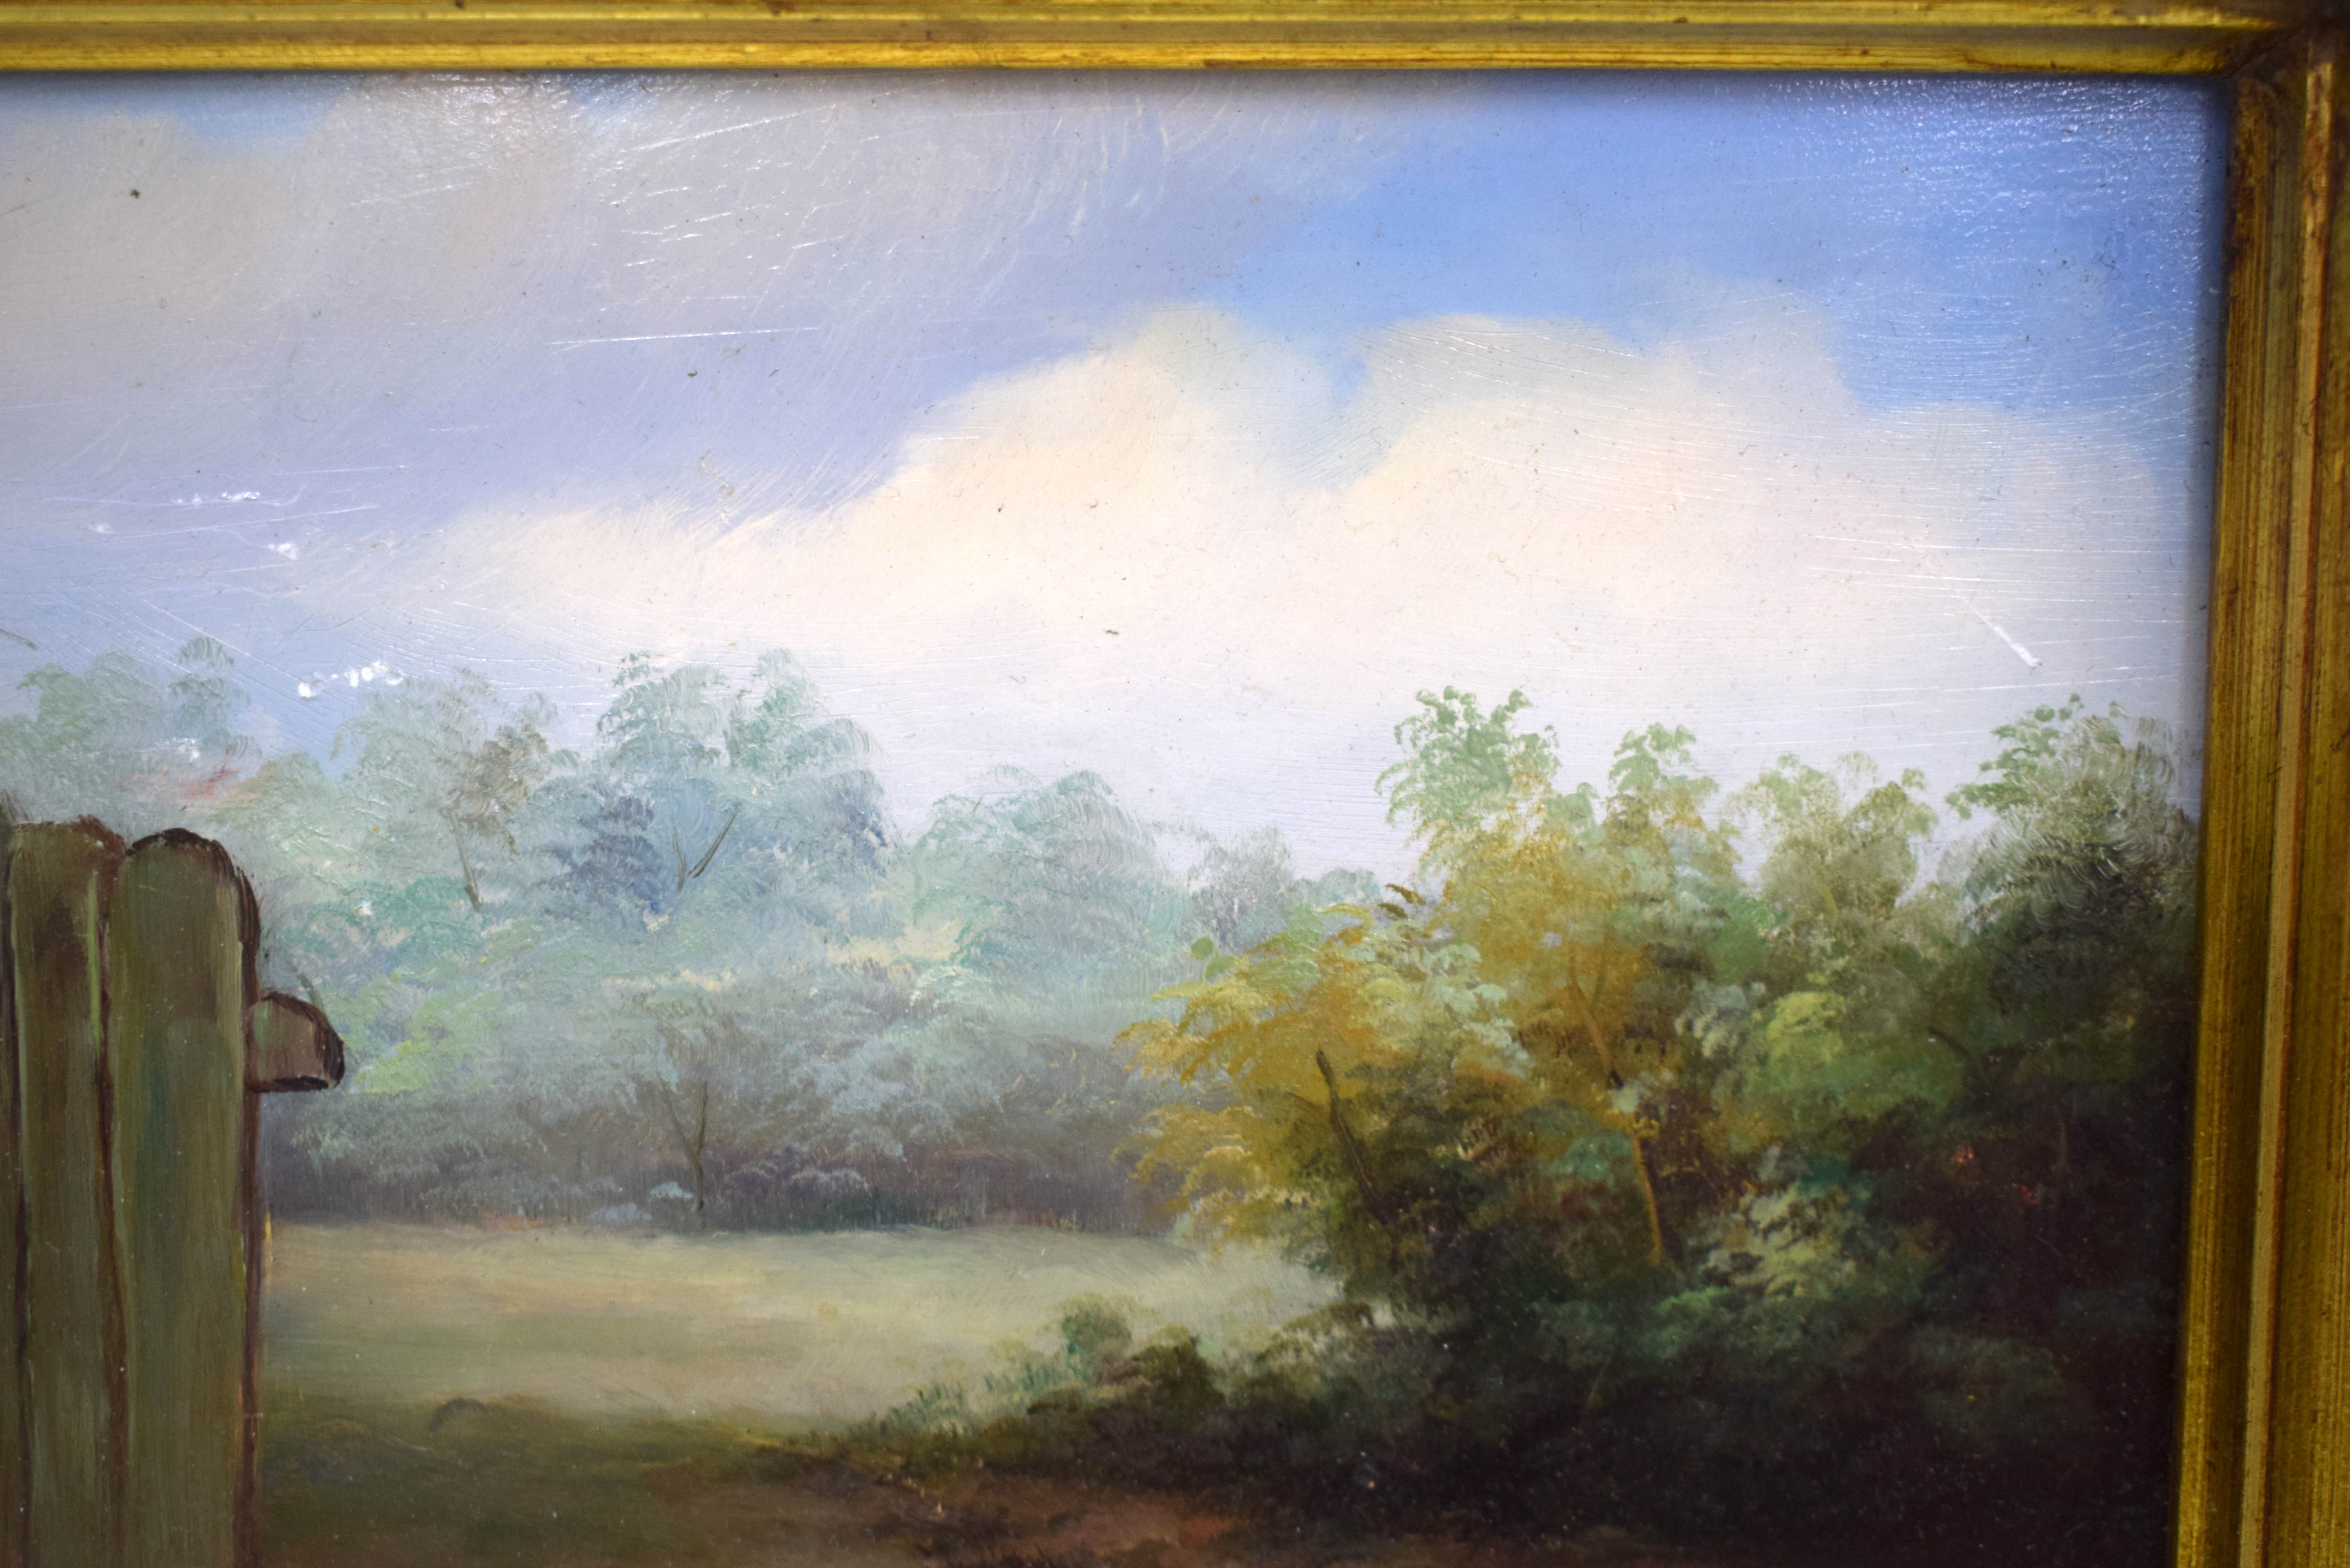 George Baxter (C1900) Farmyard Scene, Oil on board. Image 40 cm x 30 cm. - Image 11 of 13